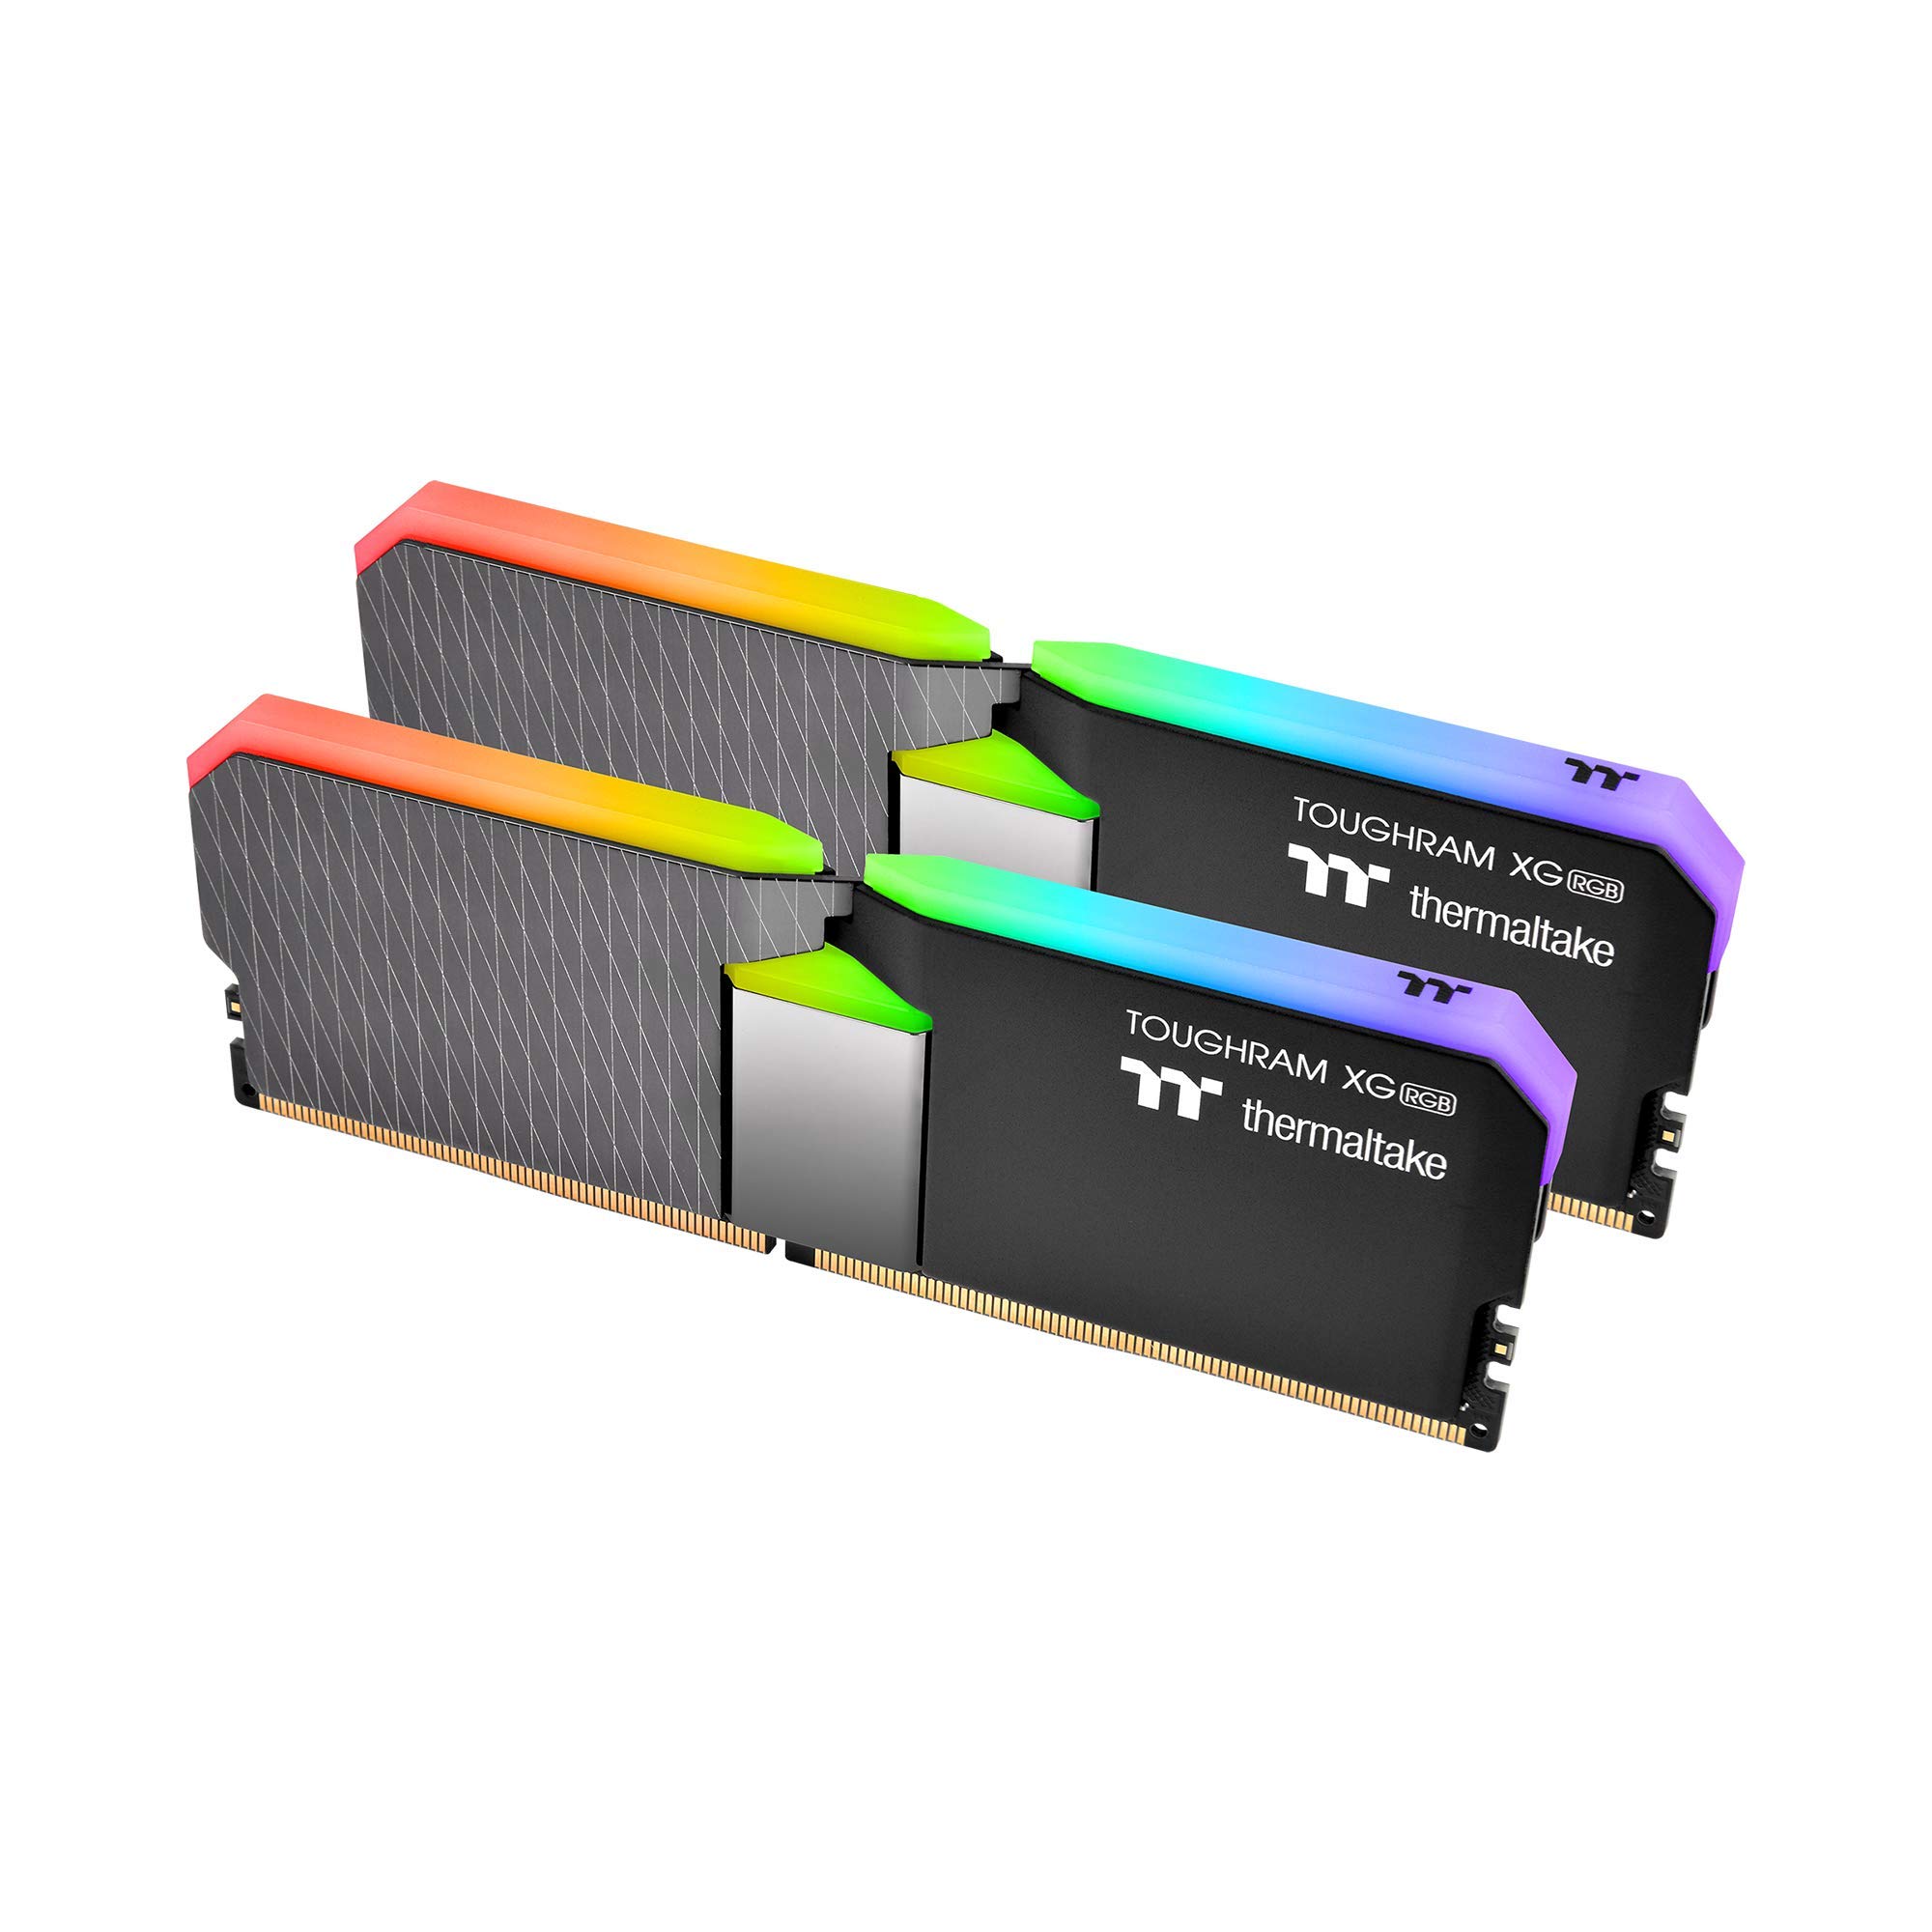 Thermaltake TOUGHRAM XG RGB DDR4 3600MHz 16GB 8GB x 2 16.80万色 RGB AlexaRazer Chroma5V マザーボード 同期ケー